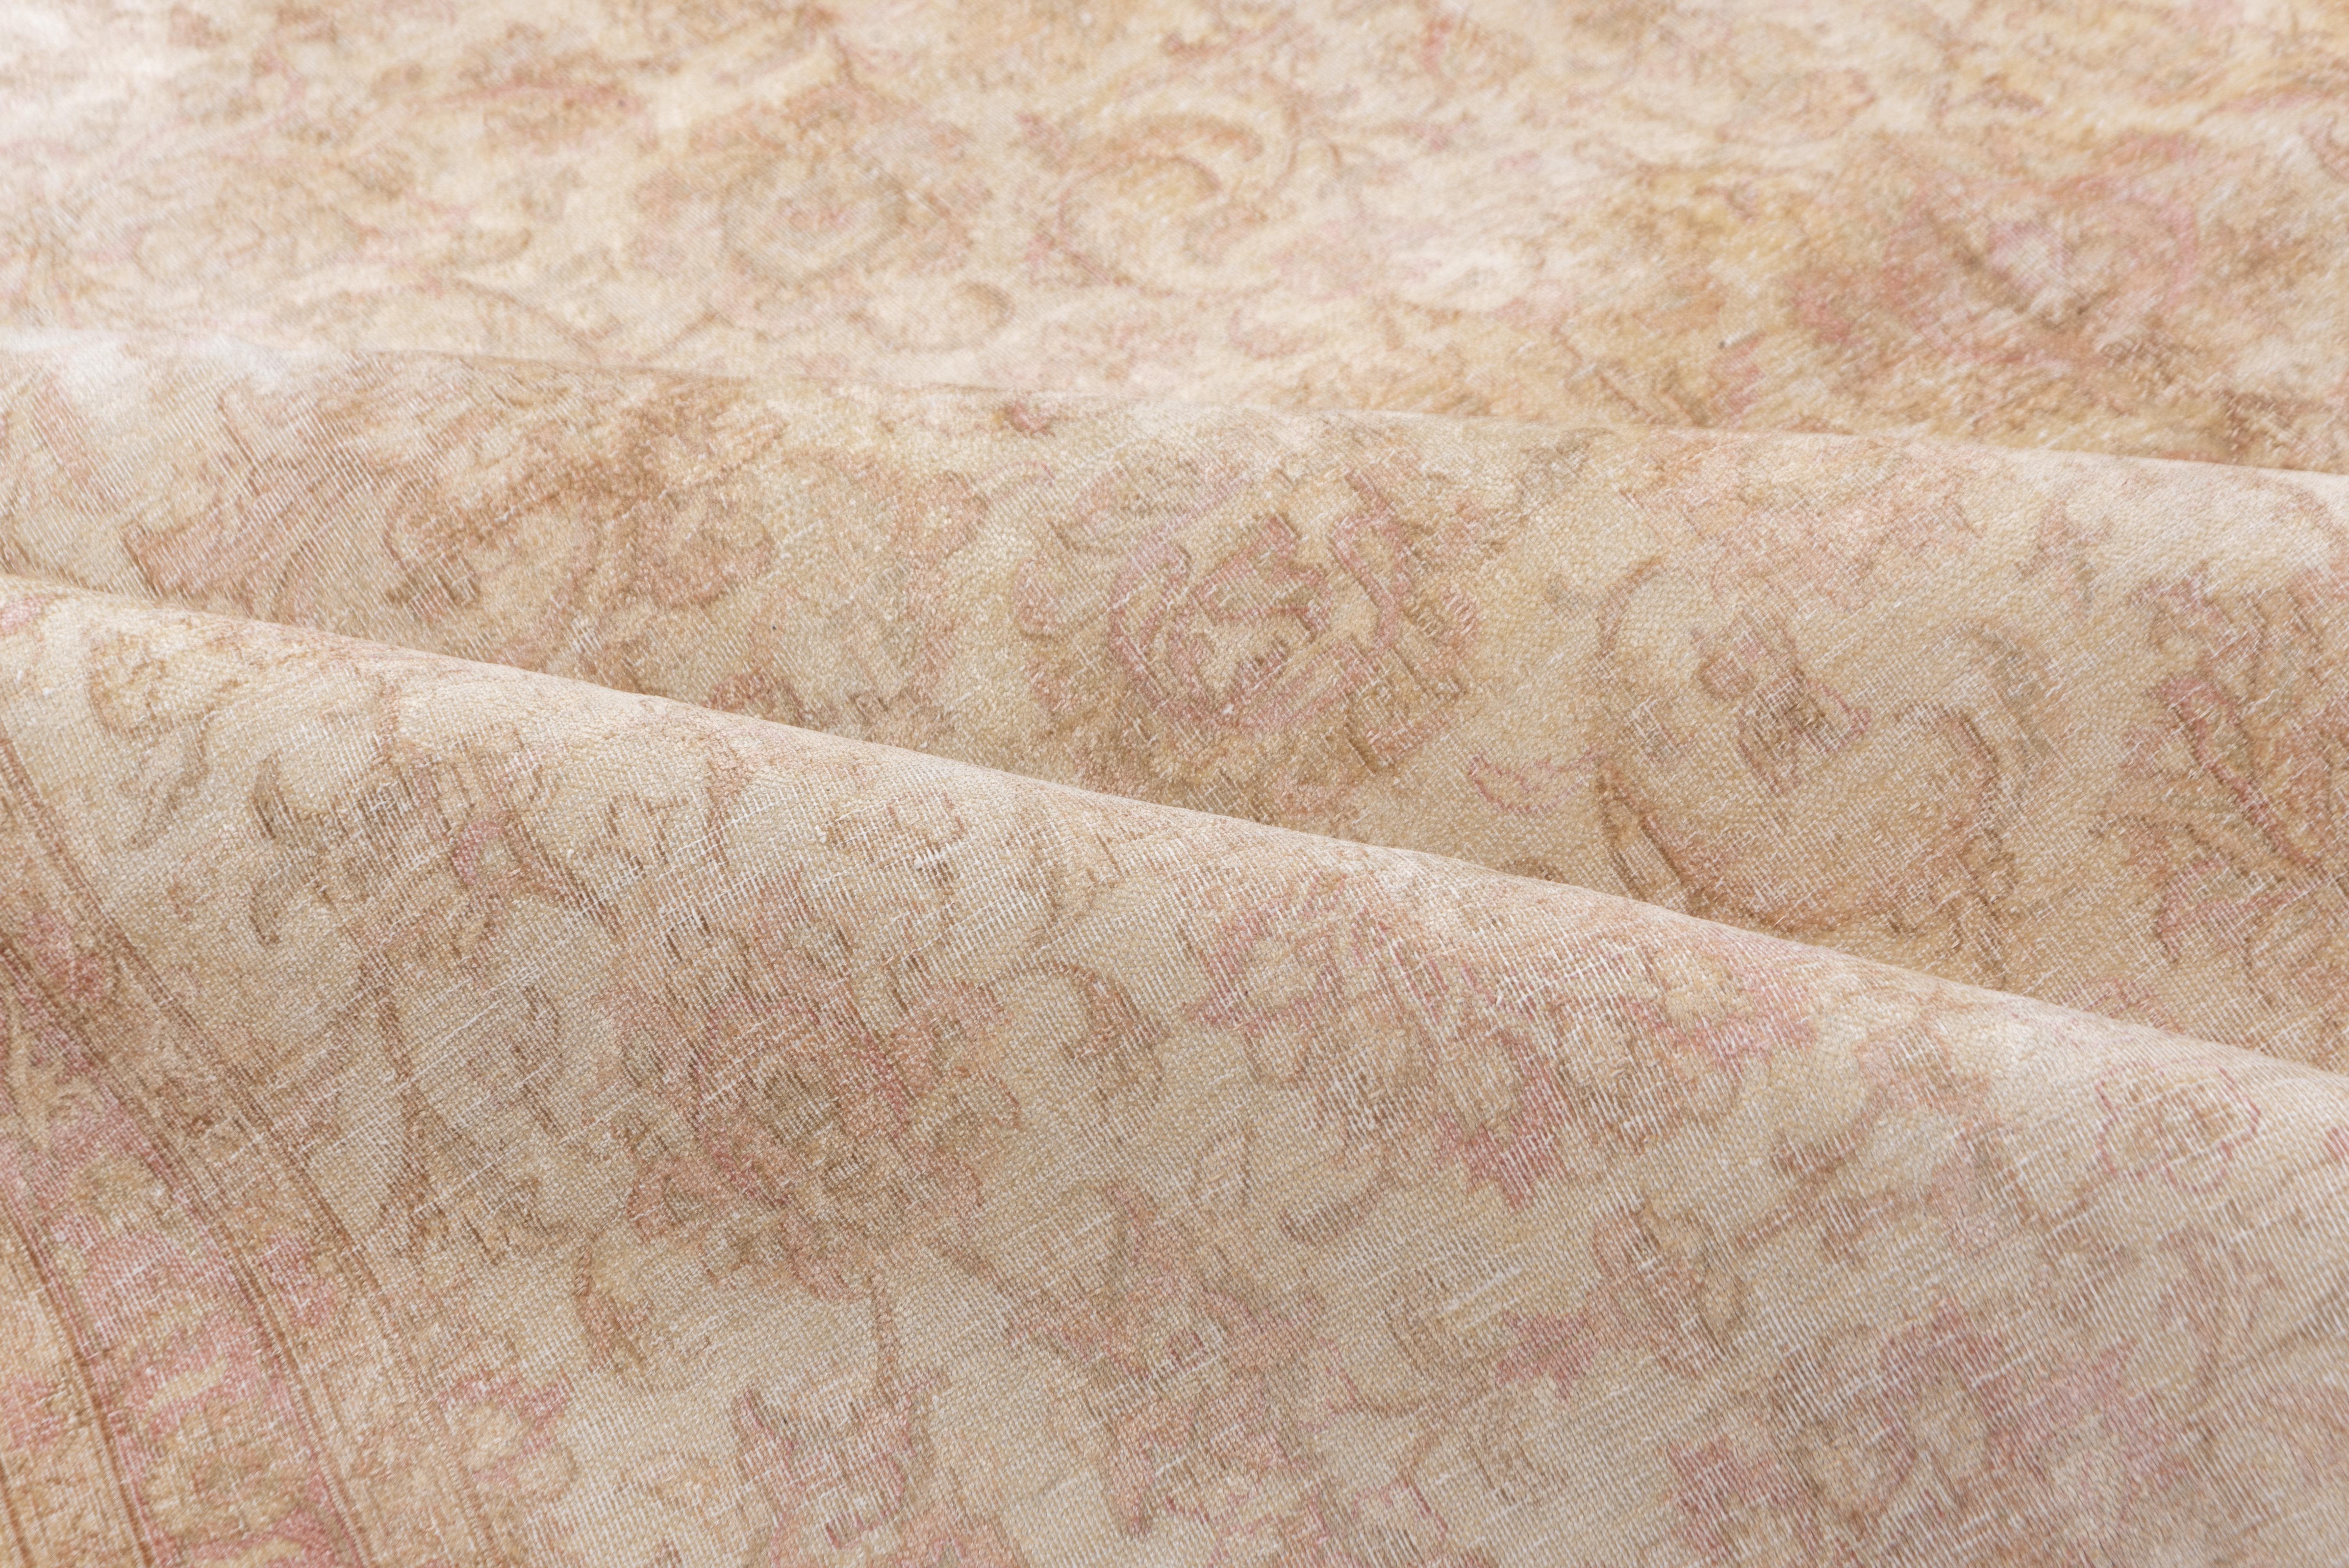 Hand-Knotted Antique Urban Silk Turkish Hereke Carpet, Pink Accents, Neutral Palette